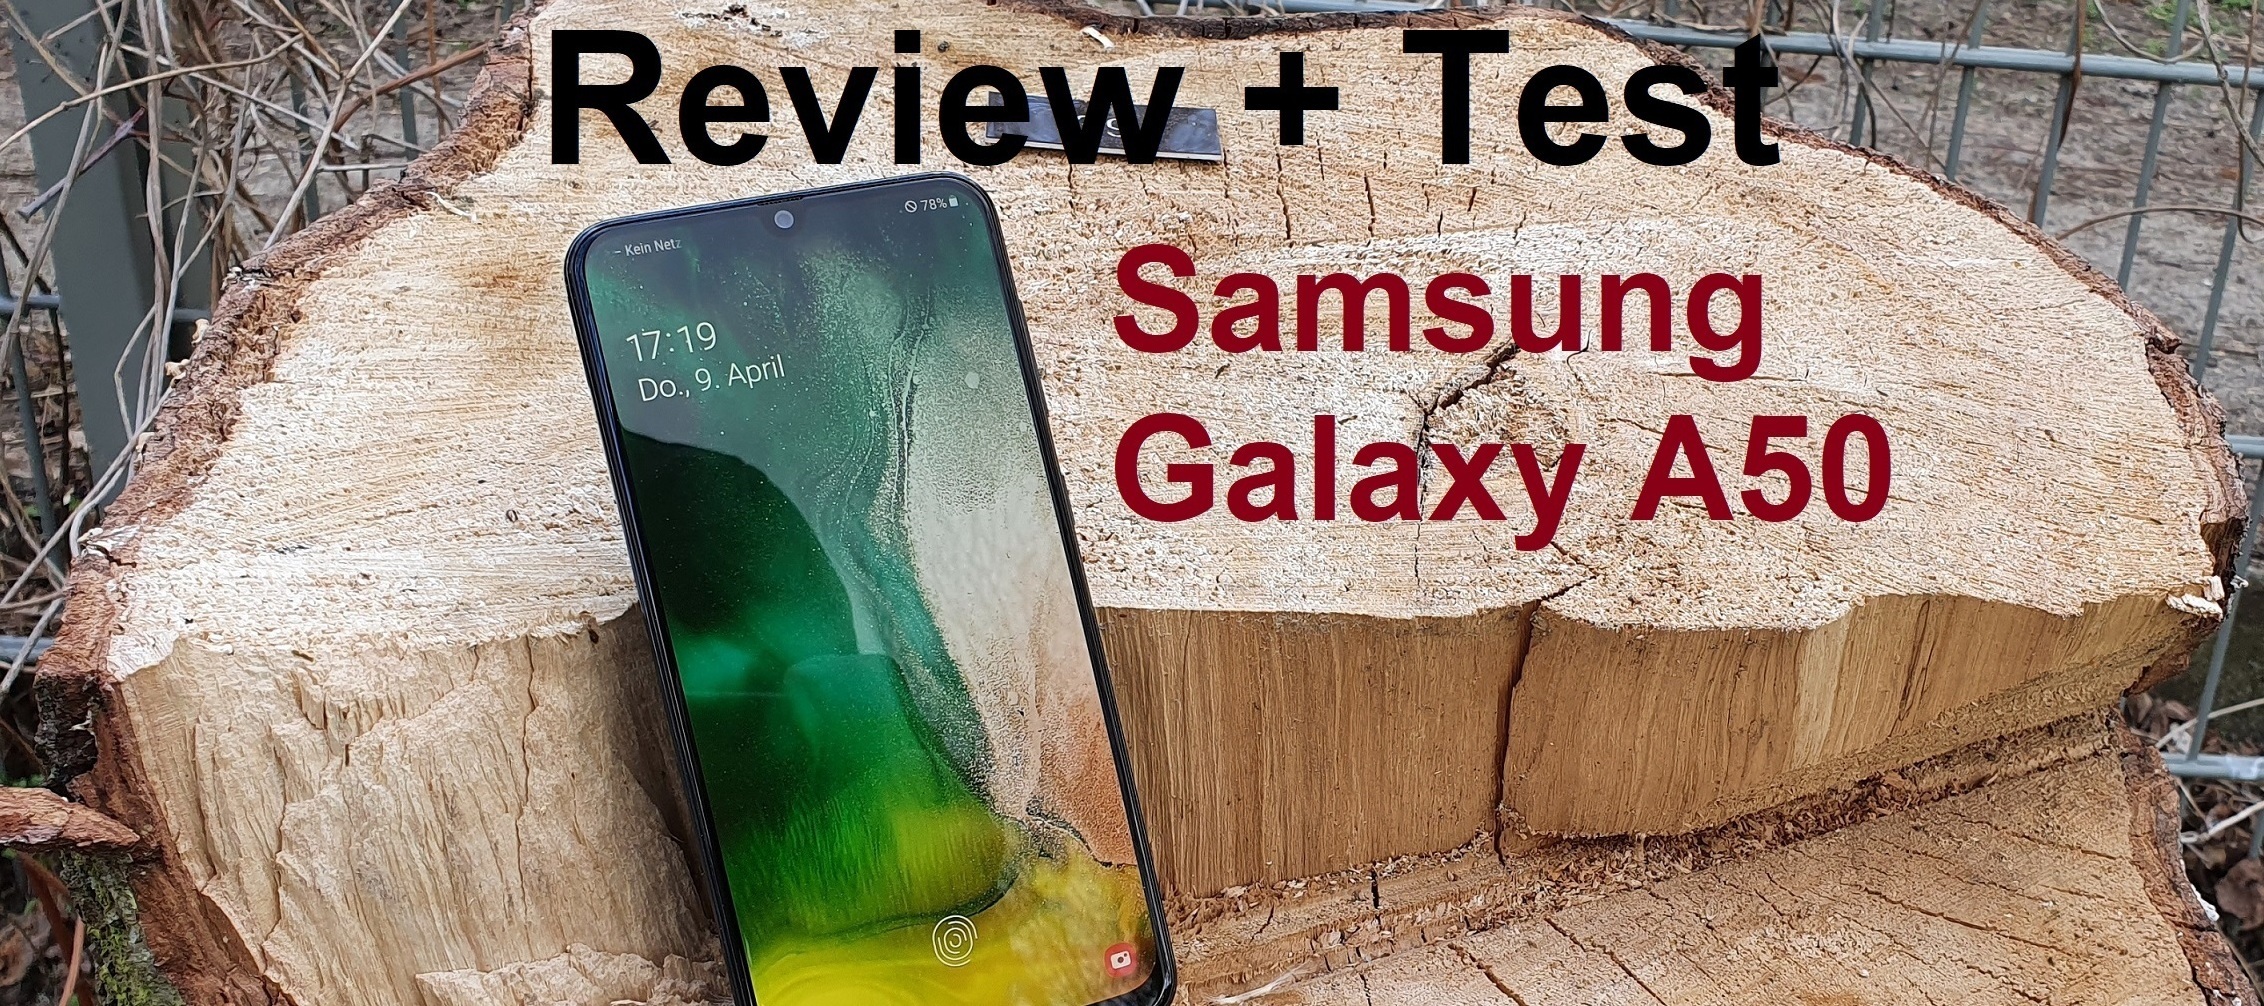 Review + Test Samsung Galaxy A50